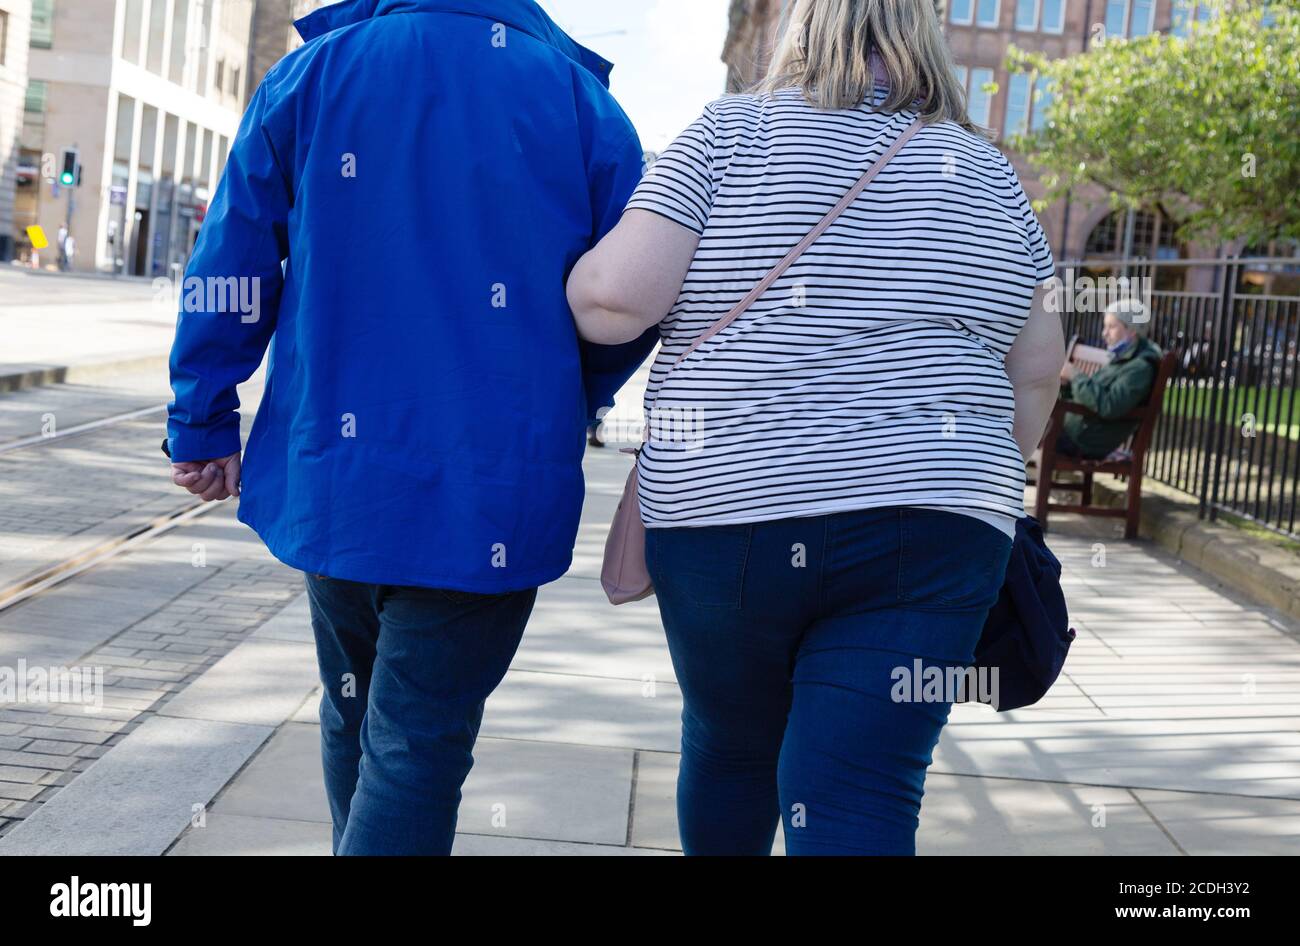 Obesity Scotland - rear view of an obese woman walking on the street, example of obesity UK; Edinburgh Scotland UK Stock Photo